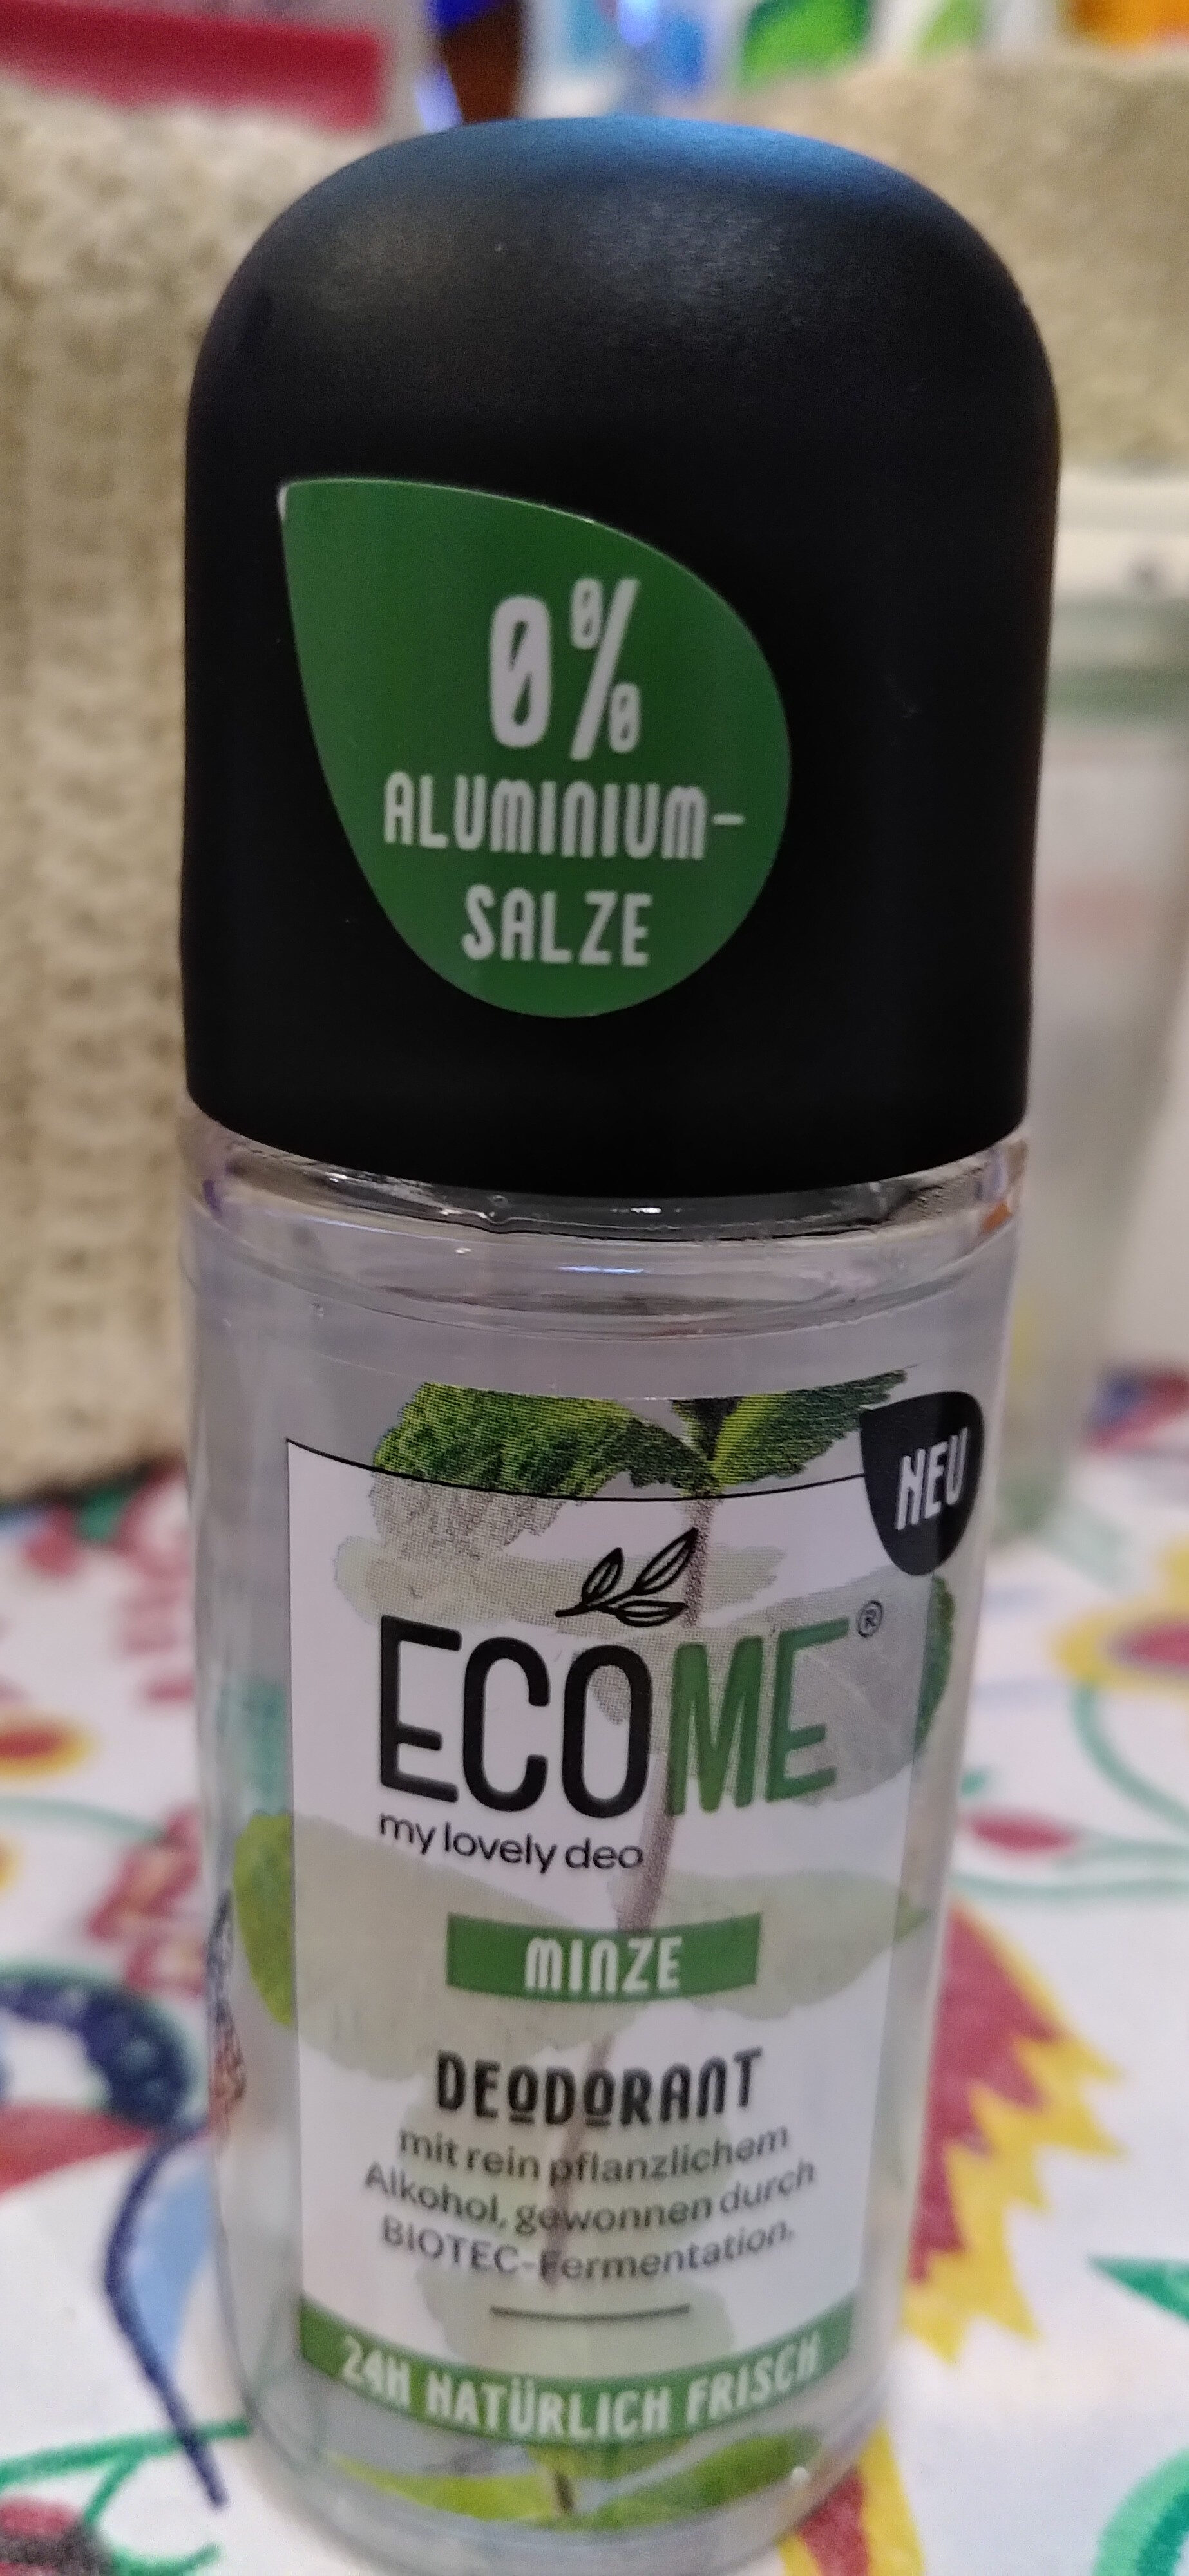 ECOME Deodorant - Product - de